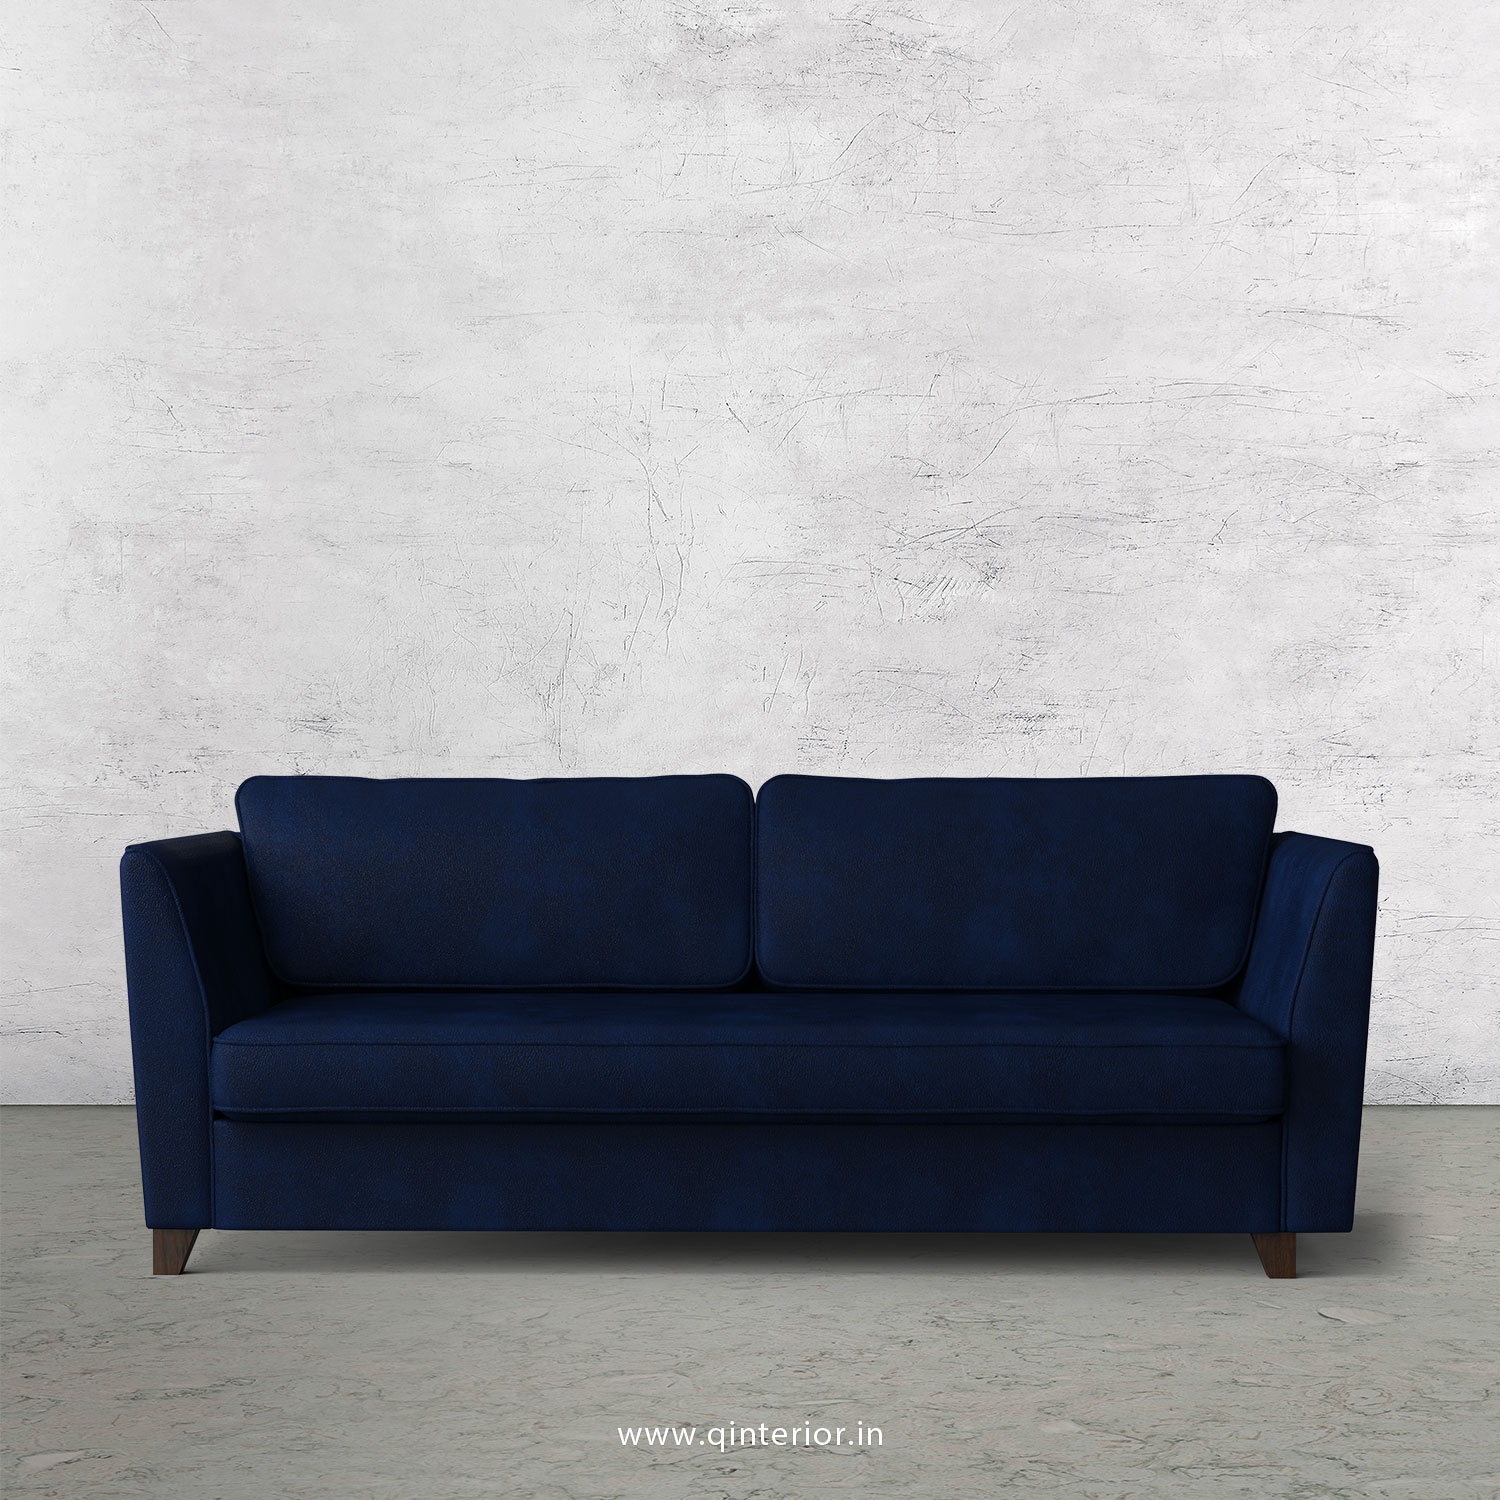 KINGSTONE 3 Seater Sofa in Fab Leather Fabric - SFA004 FL13